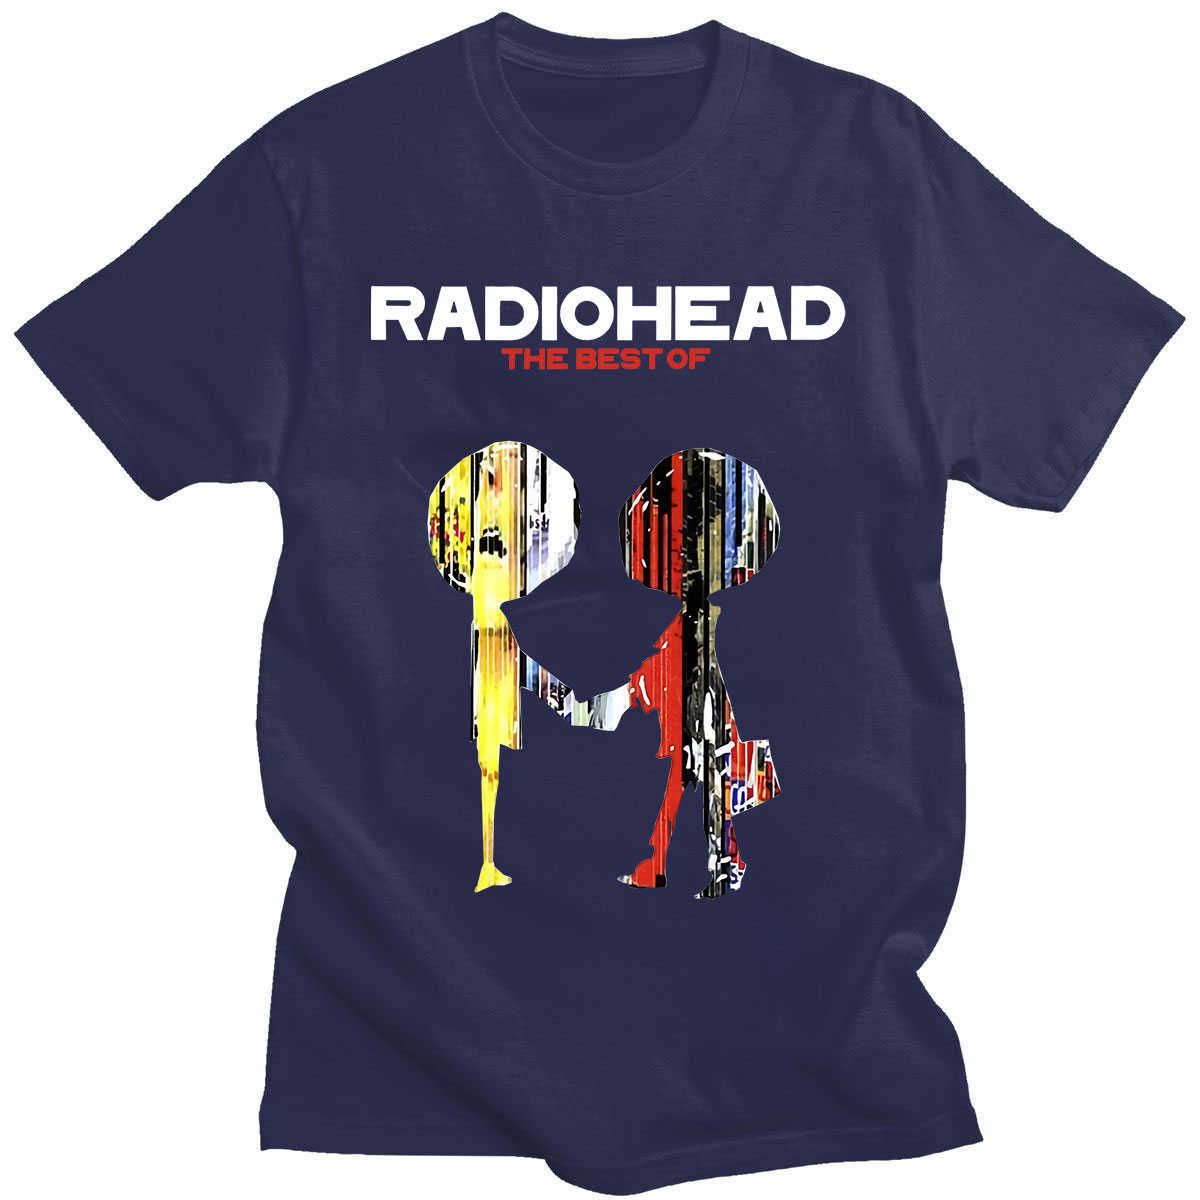 Mens Shirts Radiohead The Best Of Vintage Rock Band Radiohead T Shirt Hip Hop Unisex T Shirt Music Album Print Tee Shirt Women L230222 From $15.53 | DHgate.Com